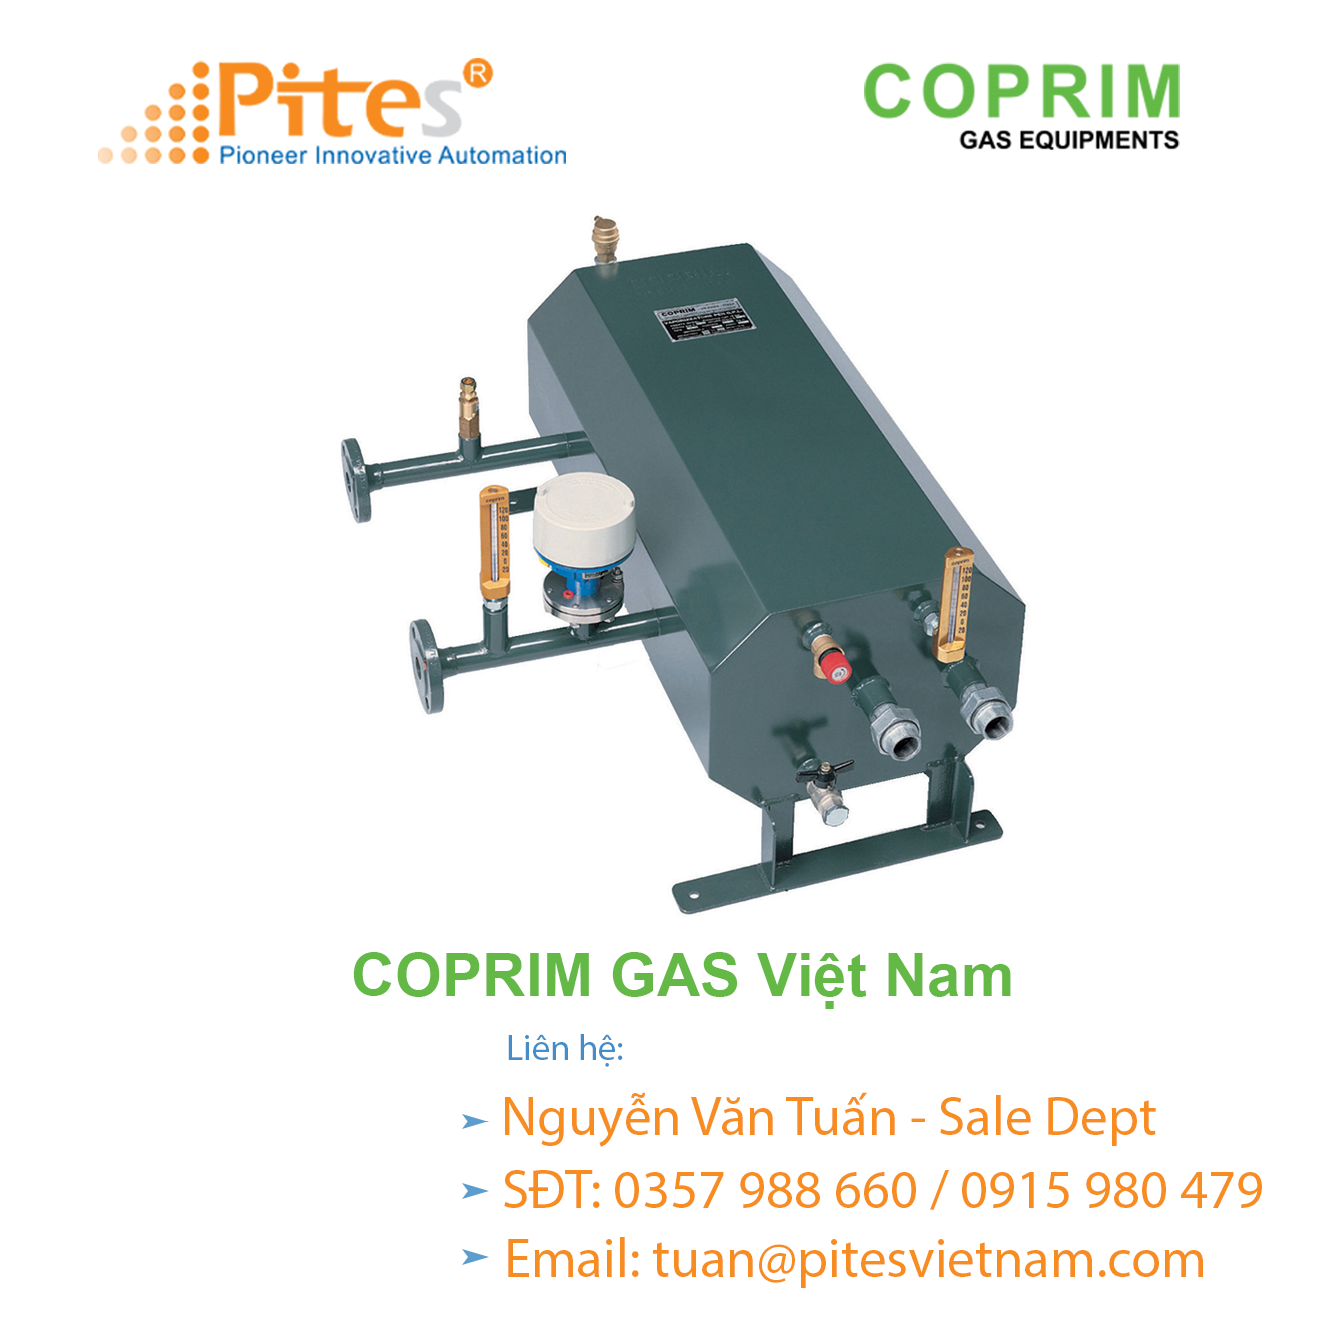 coprim-gas-vietnam-coprim-gas-viet-nam-dai-ly-coprim-gas-list-code-coprim-gas-part-8.png